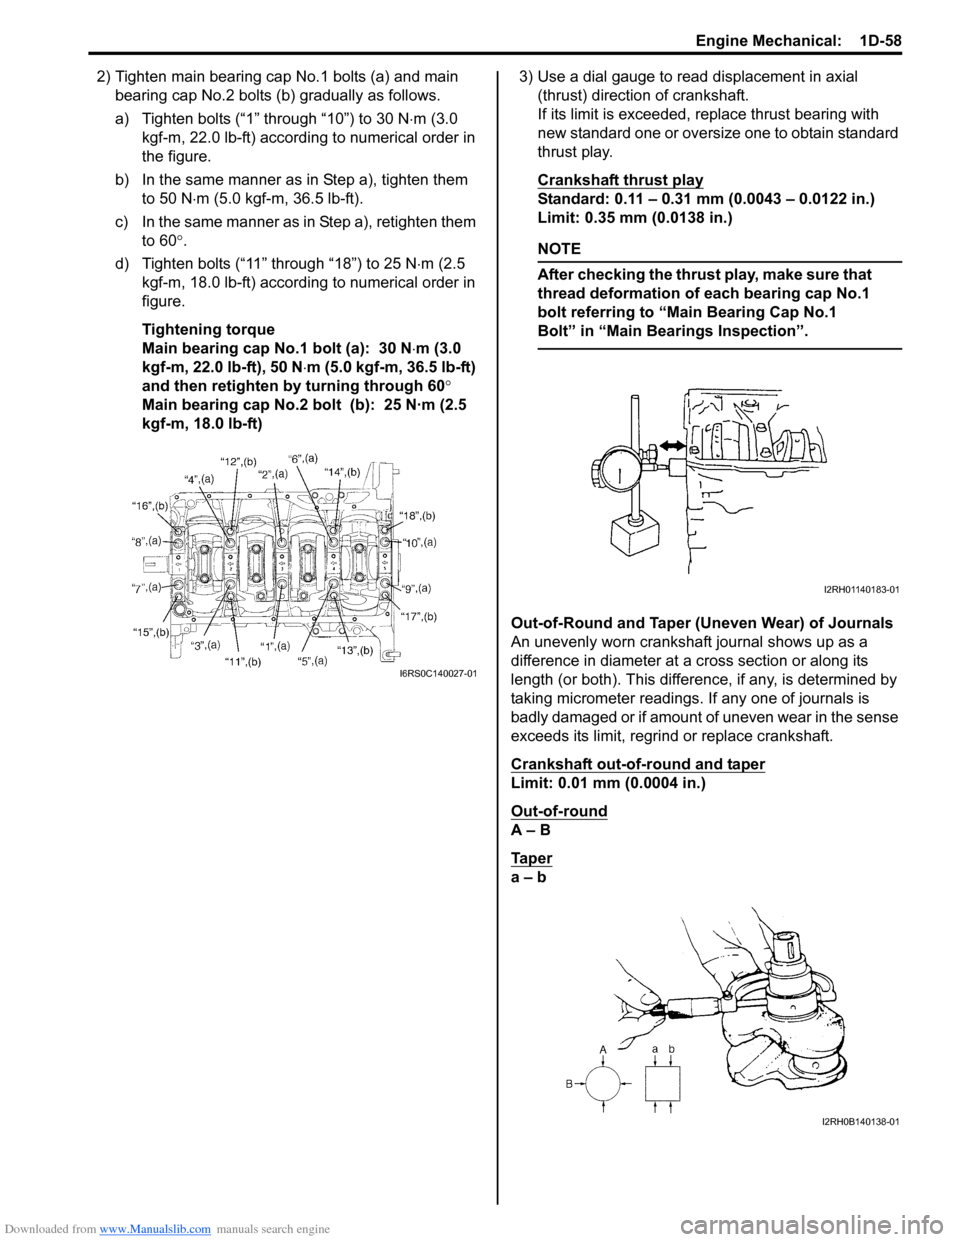 SUZUKI SWIFT 2006 2.G Service Service Manual Downloaded from www.Manualslib.com manuals search engine Engine Mechanical:  1D-58
2) Tighten main bearing cap No.1 bolts (a) and main bearing cap No.2 bolts (b ) gradually as follows.
a) Tighten bolt